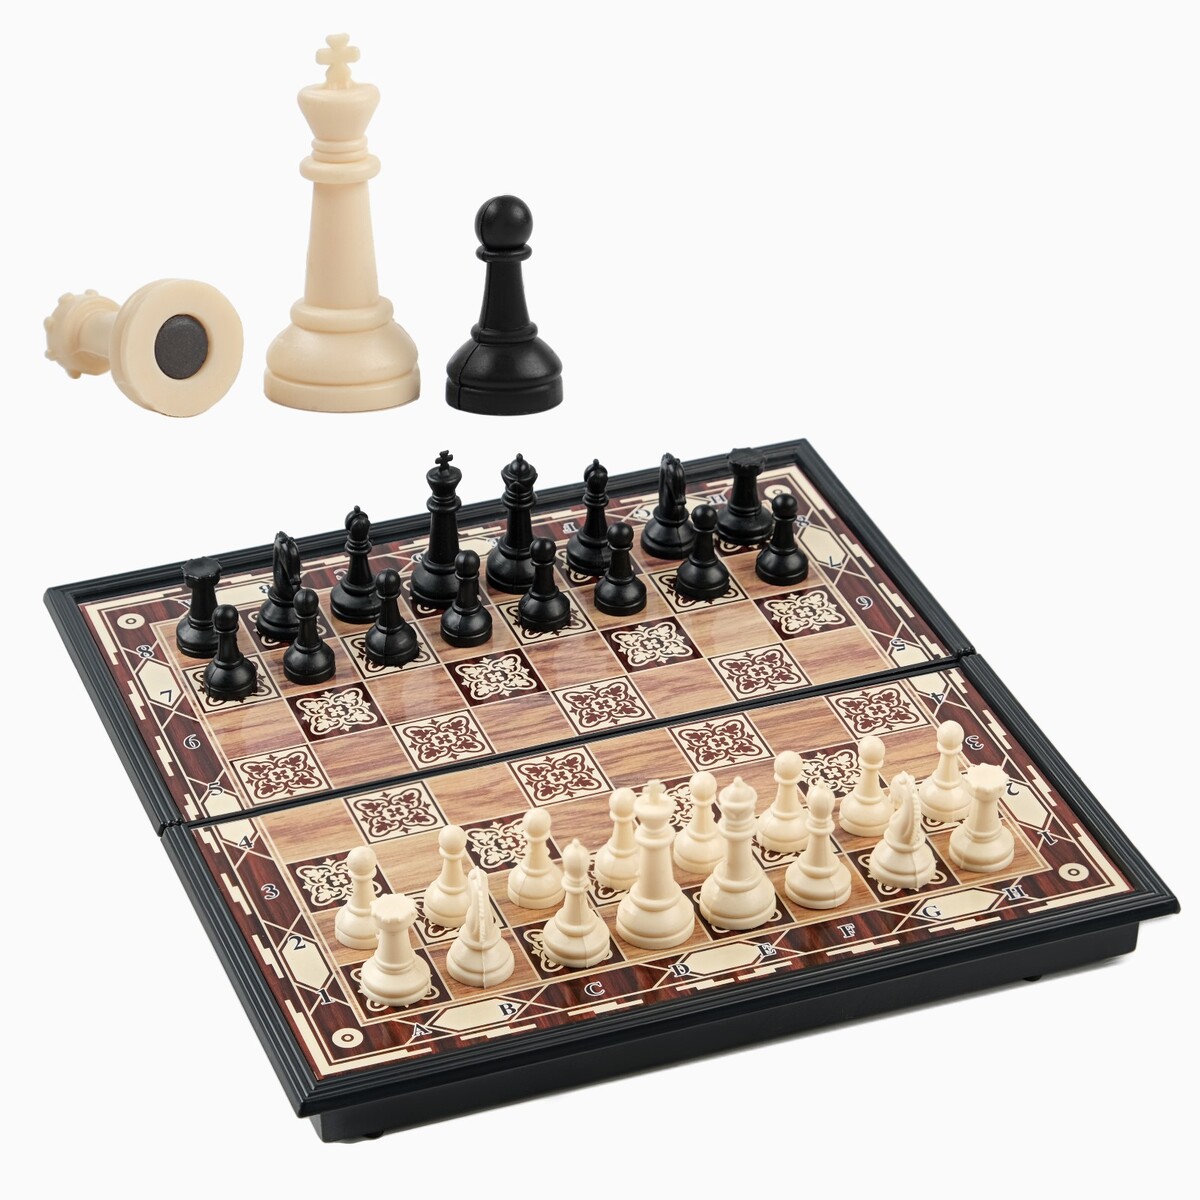 Шахматы, доска 18 х 18 см, клетка 1.7 х 1.7 см шахматы магнитные с ящиком доска 24 х 18 см